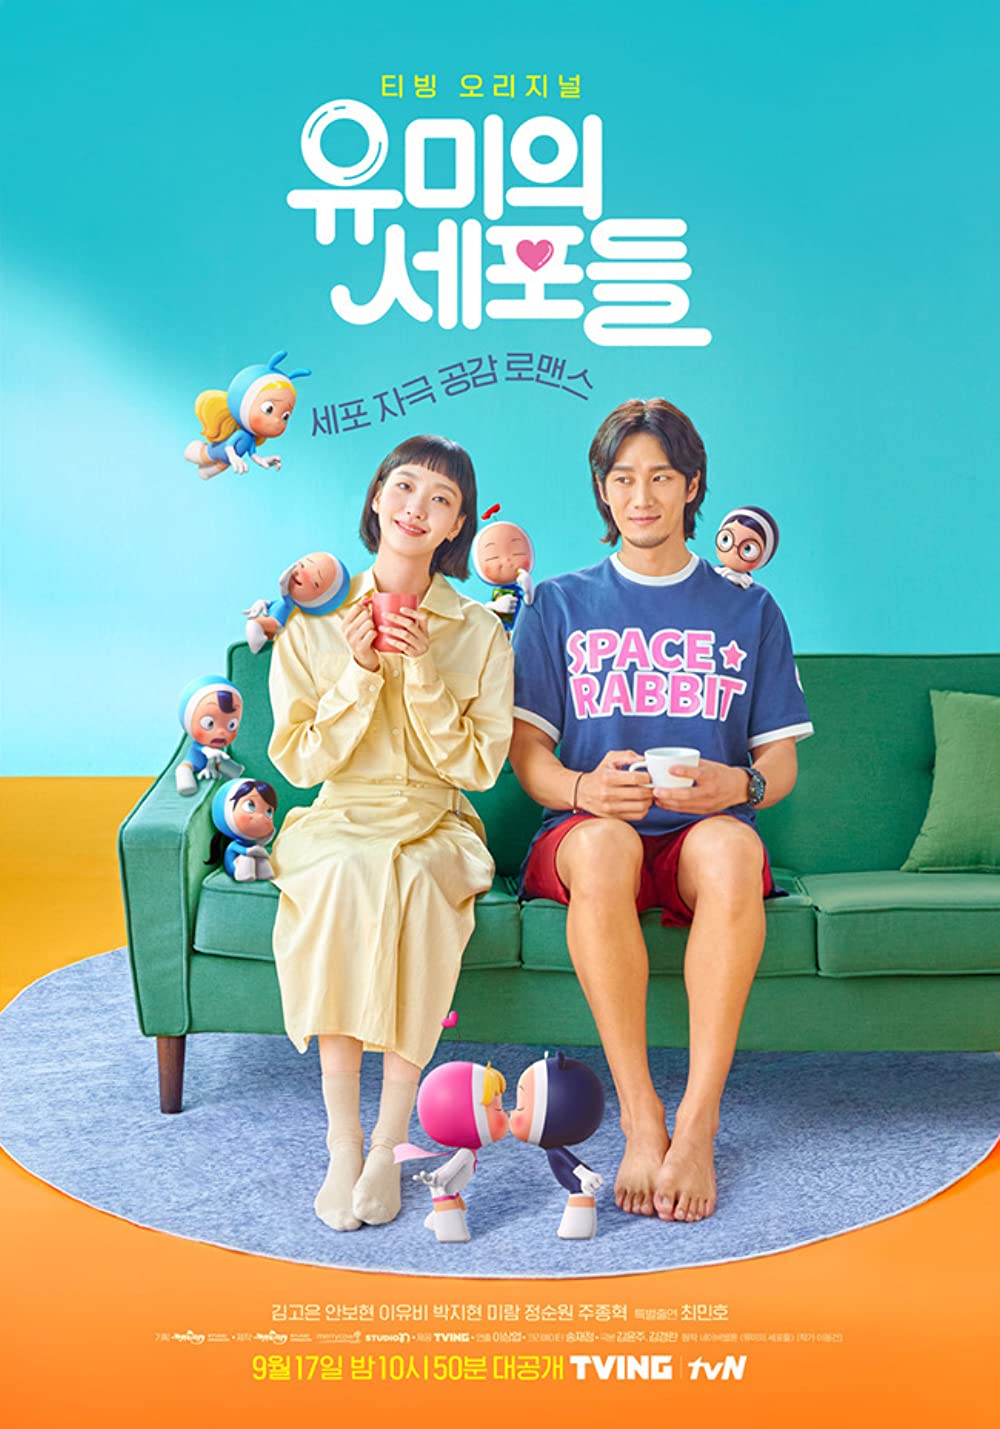 11 Drama Korea lucu romantis yang bikin ngakak, Yumi's Cells seru abis